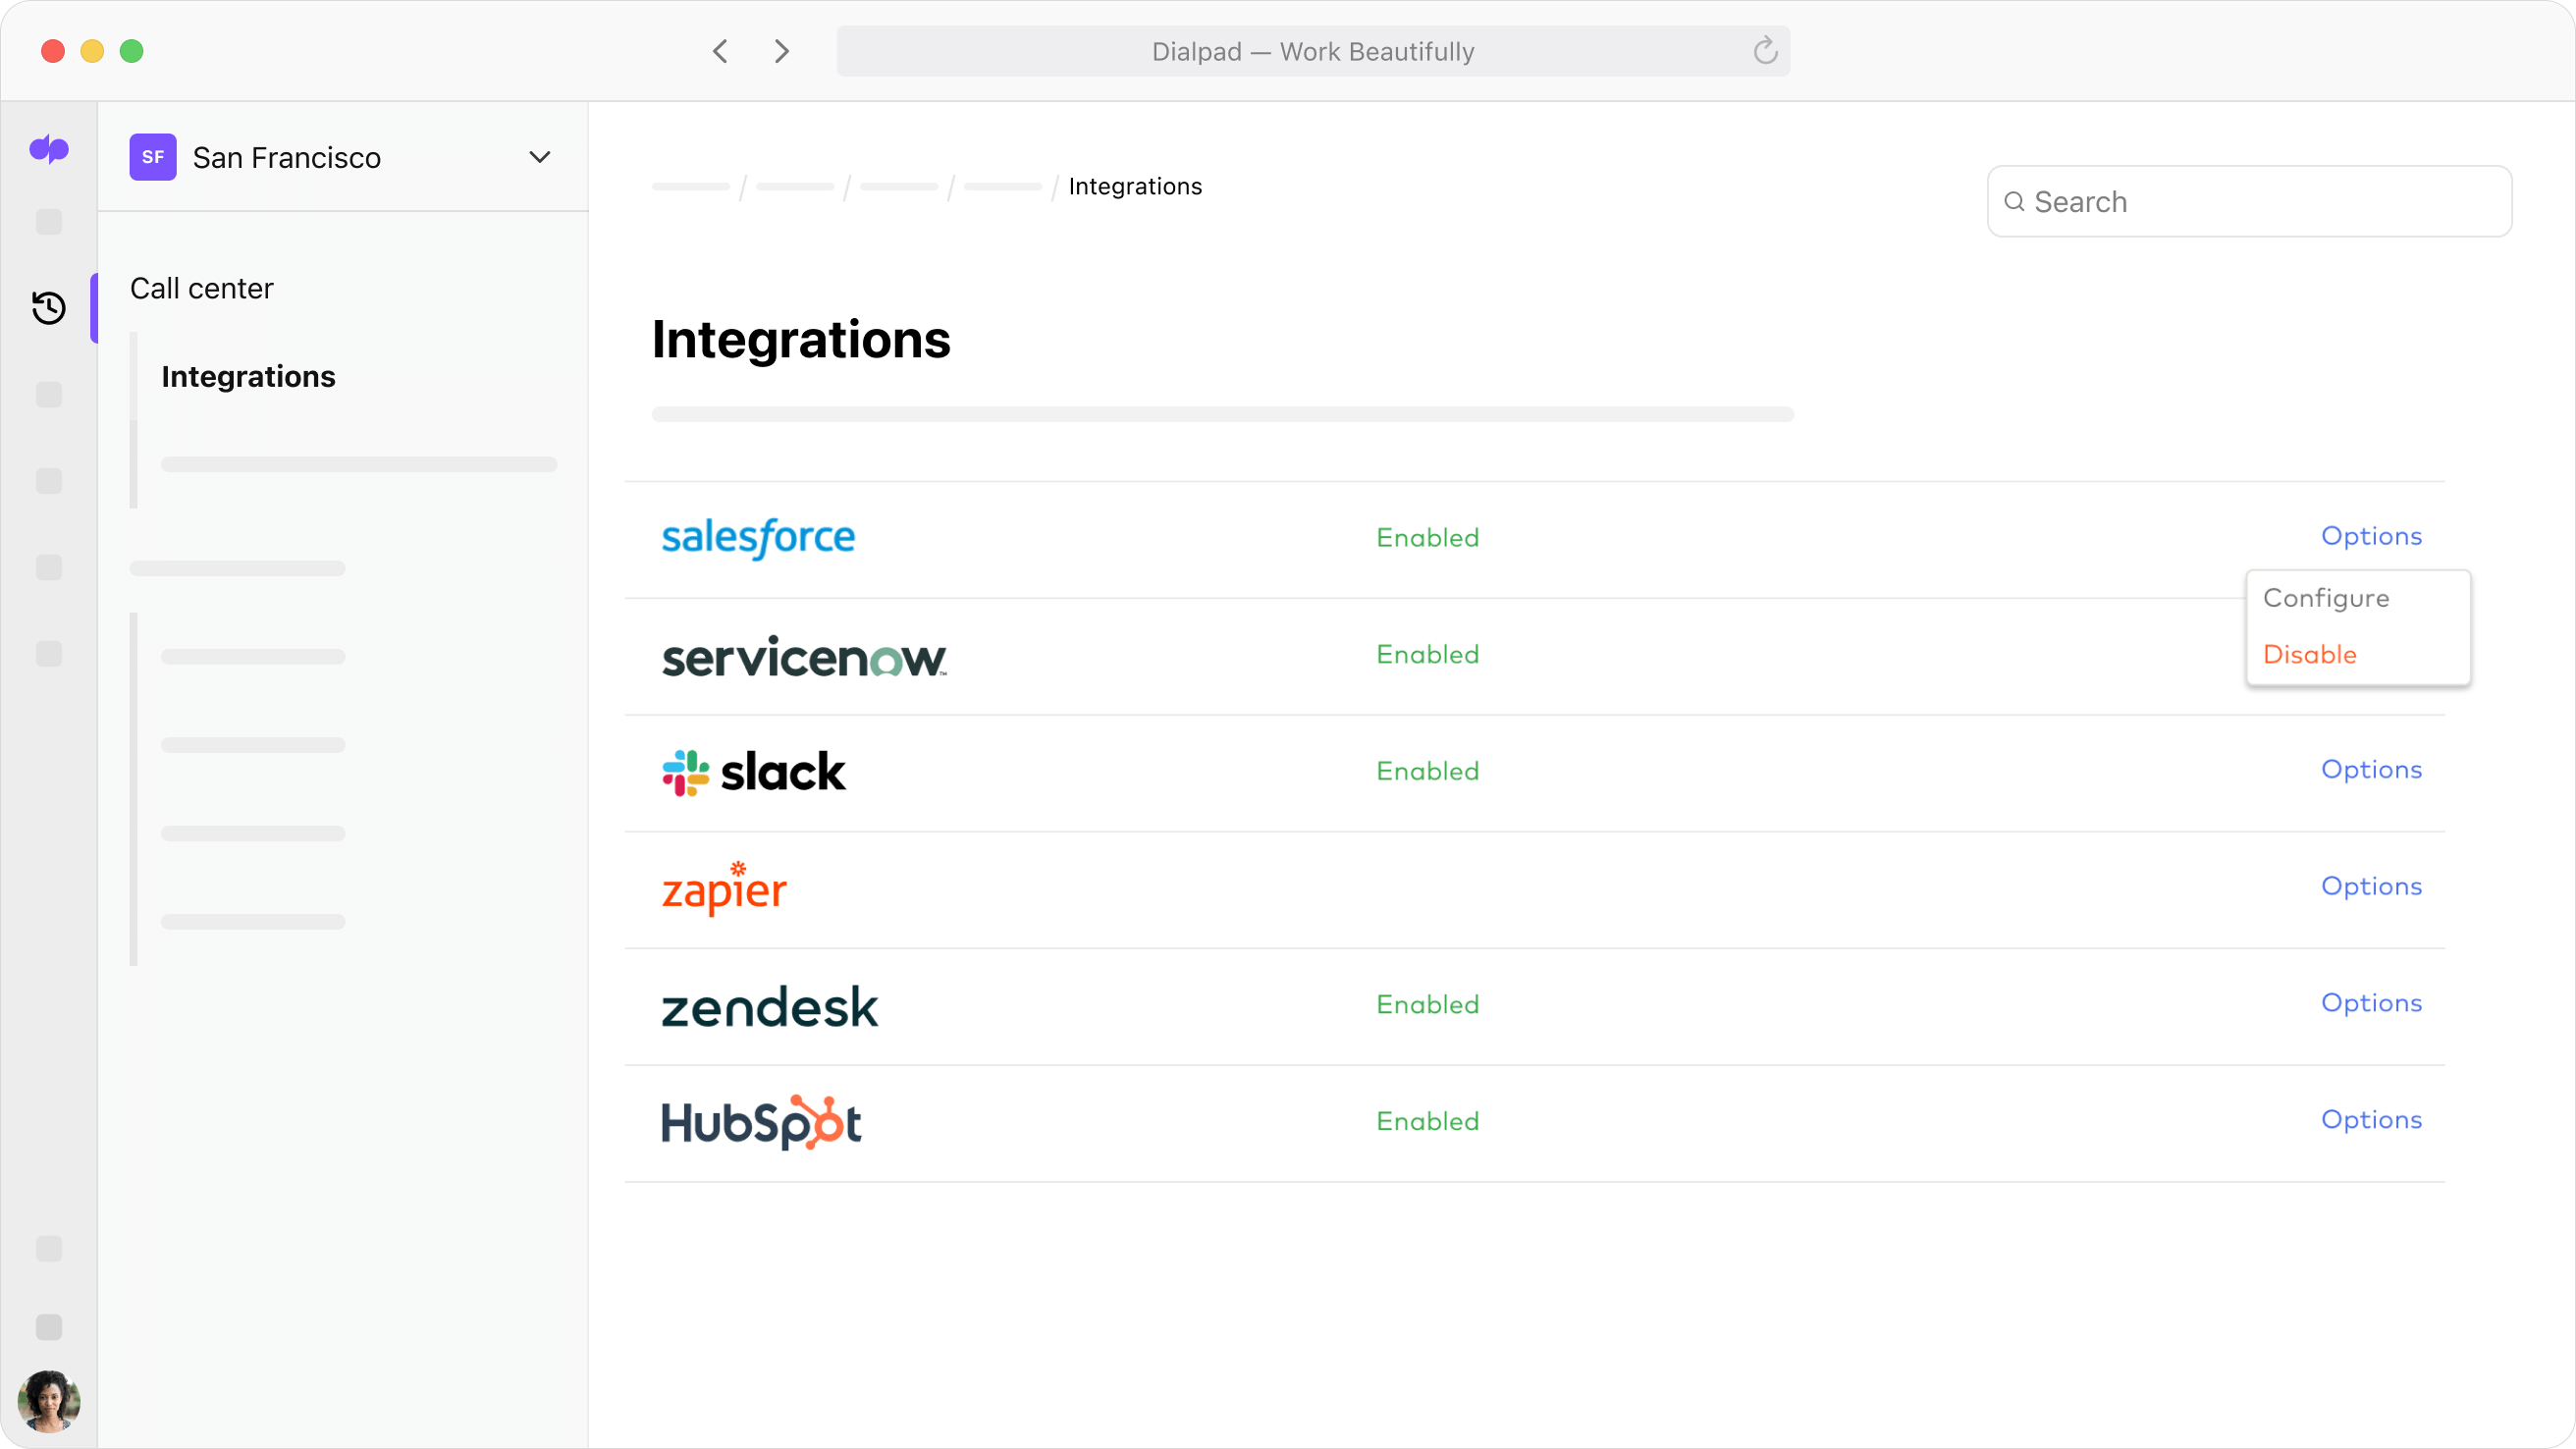 Screenshot of Dialpad integrations